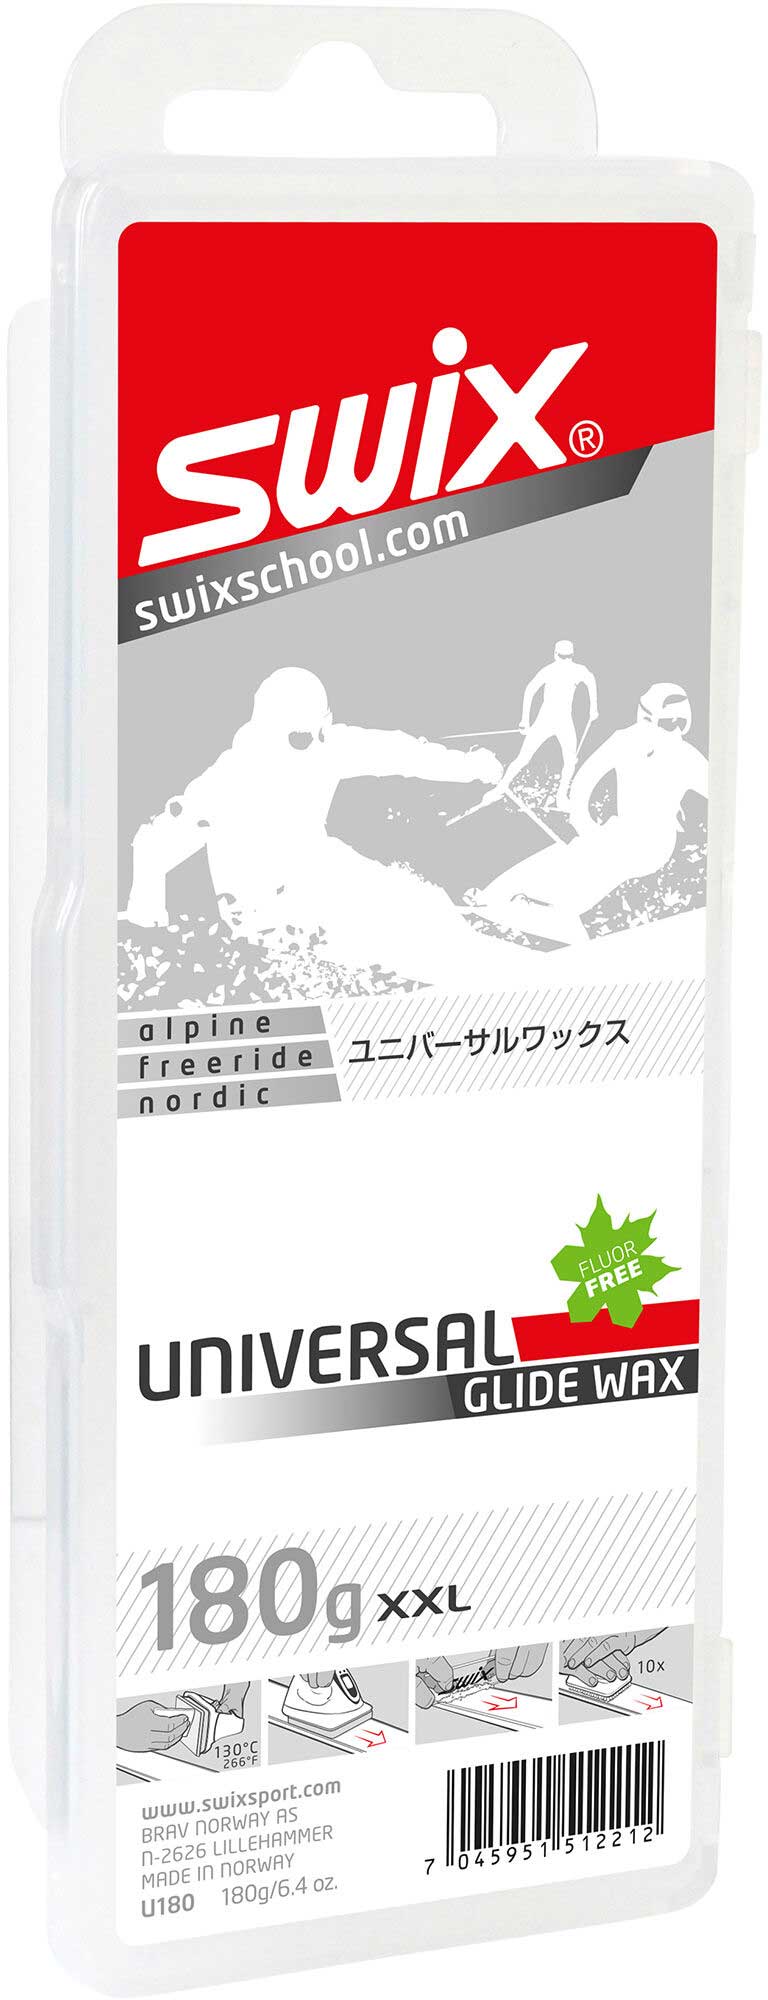 Universal wax